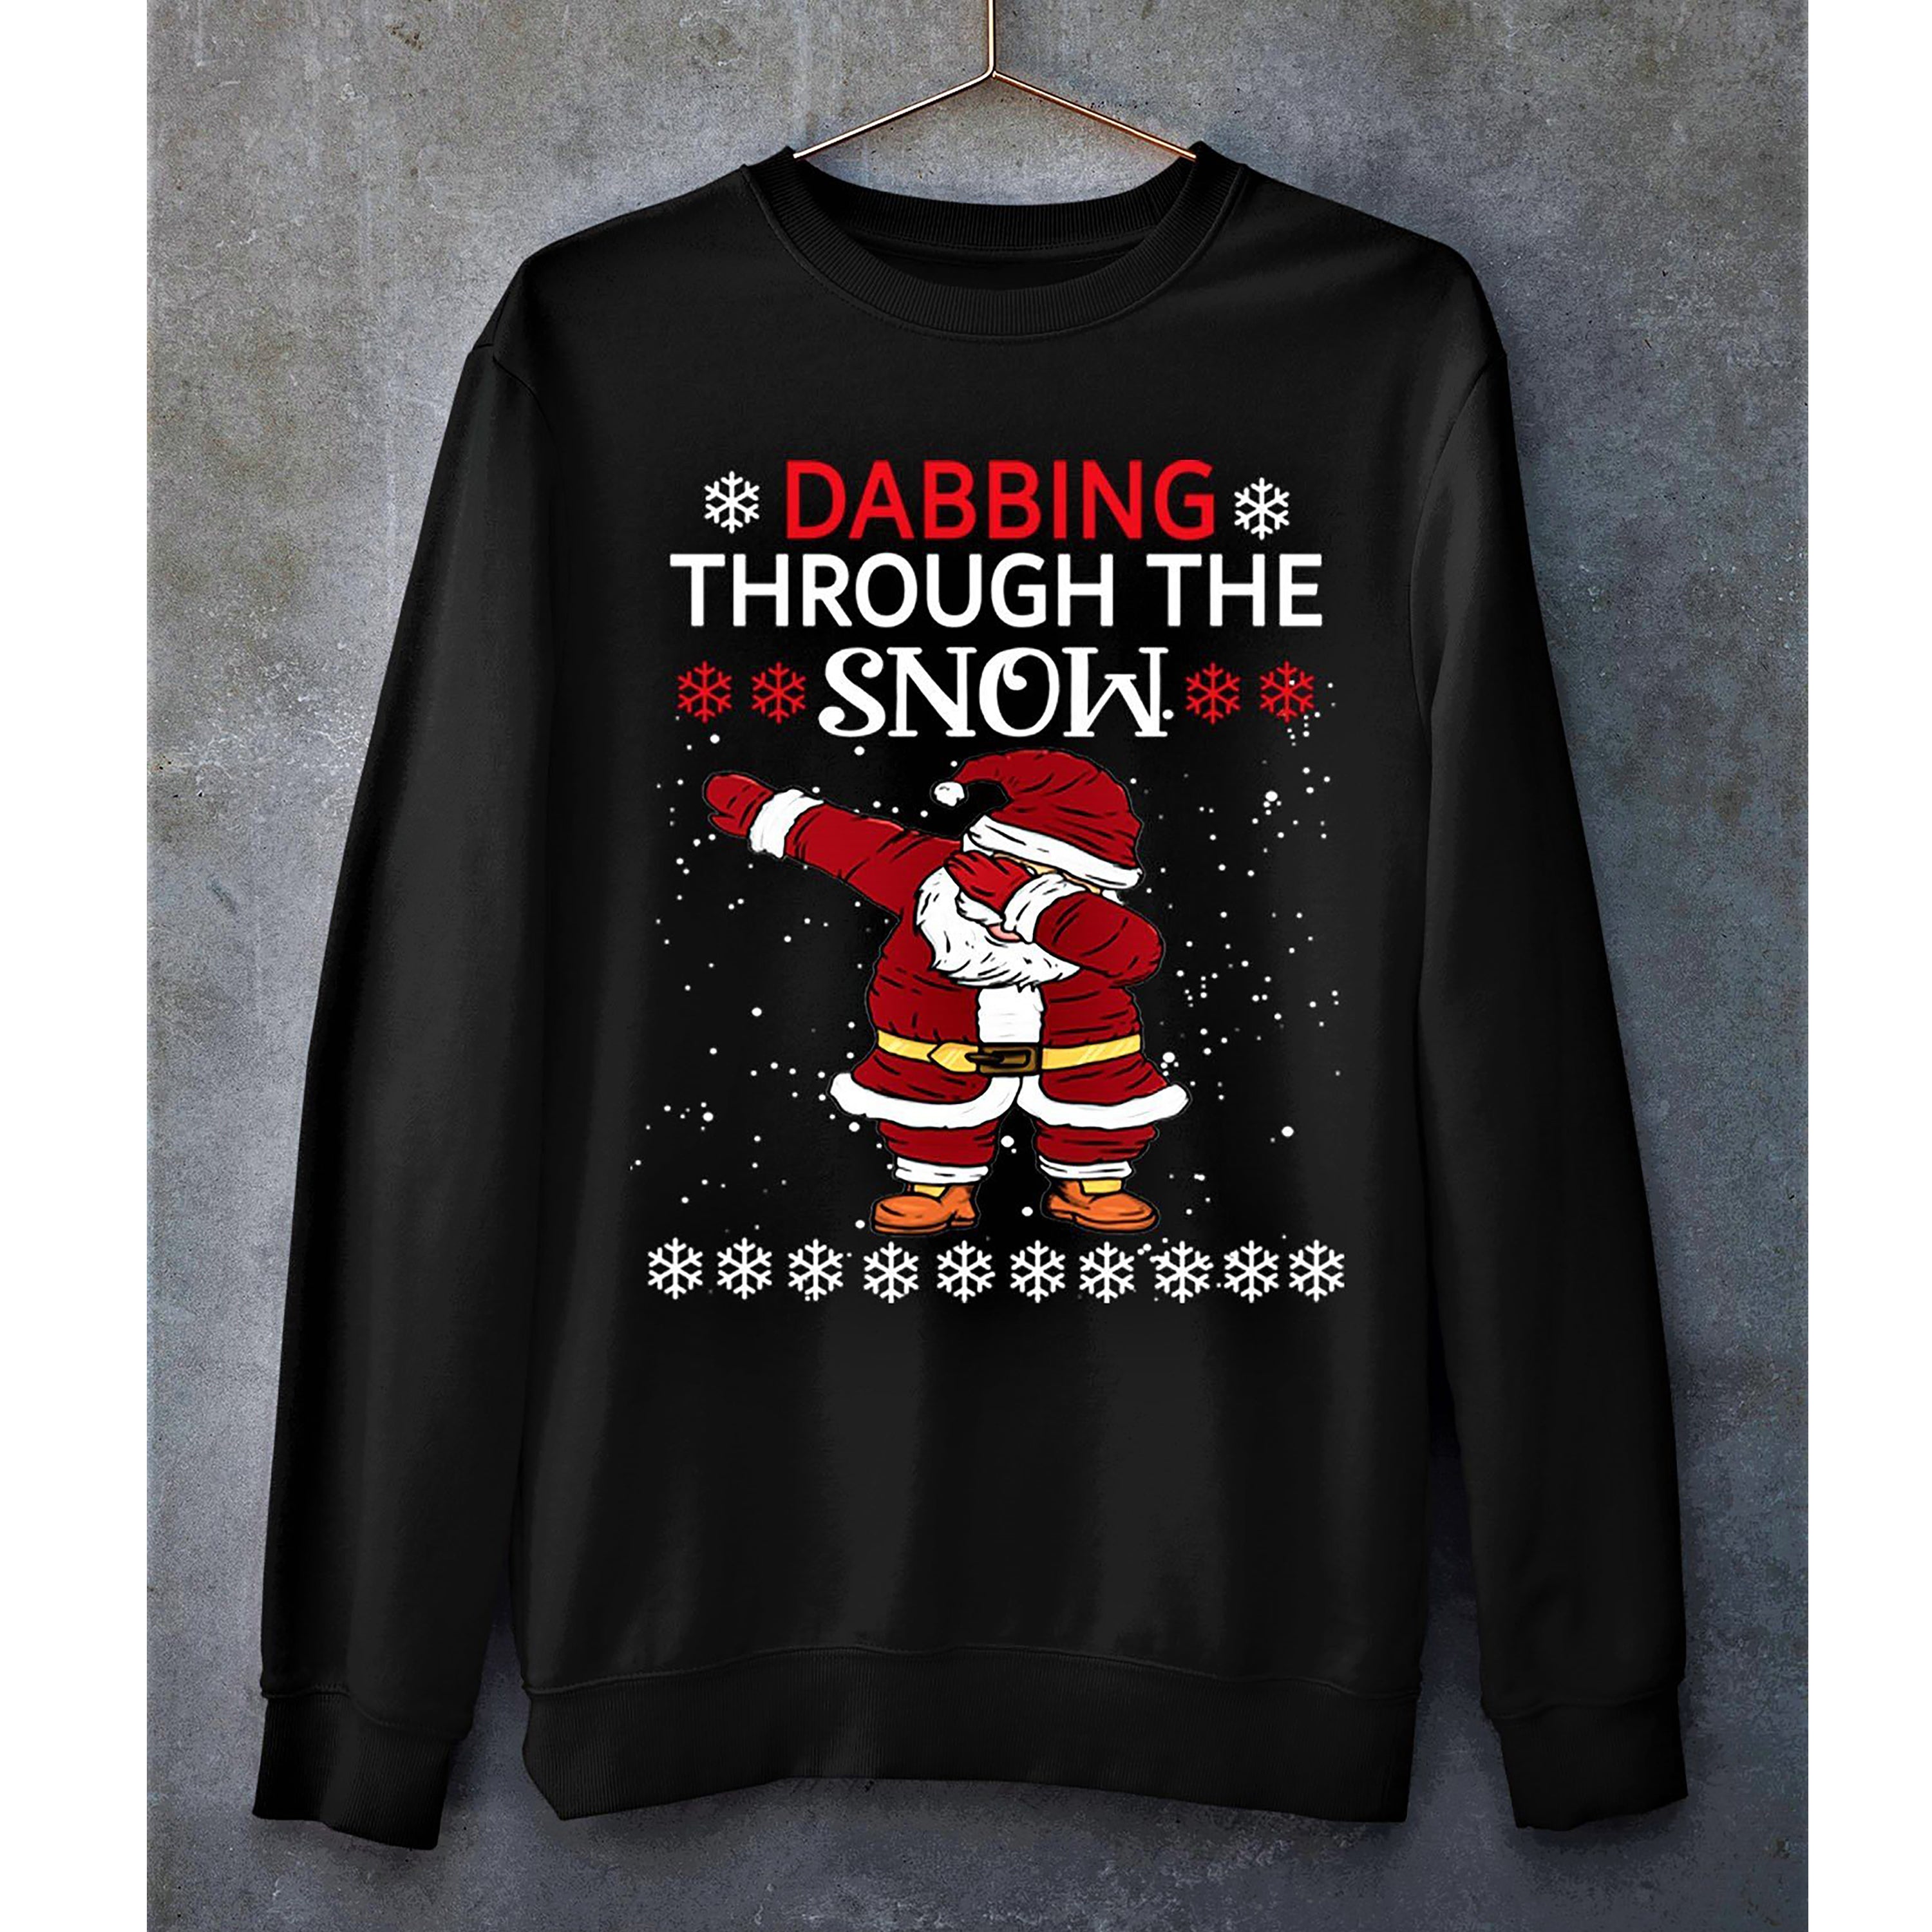 'DABBING THROUGH THE SNOW''- Hoodie & Sweatshirt.